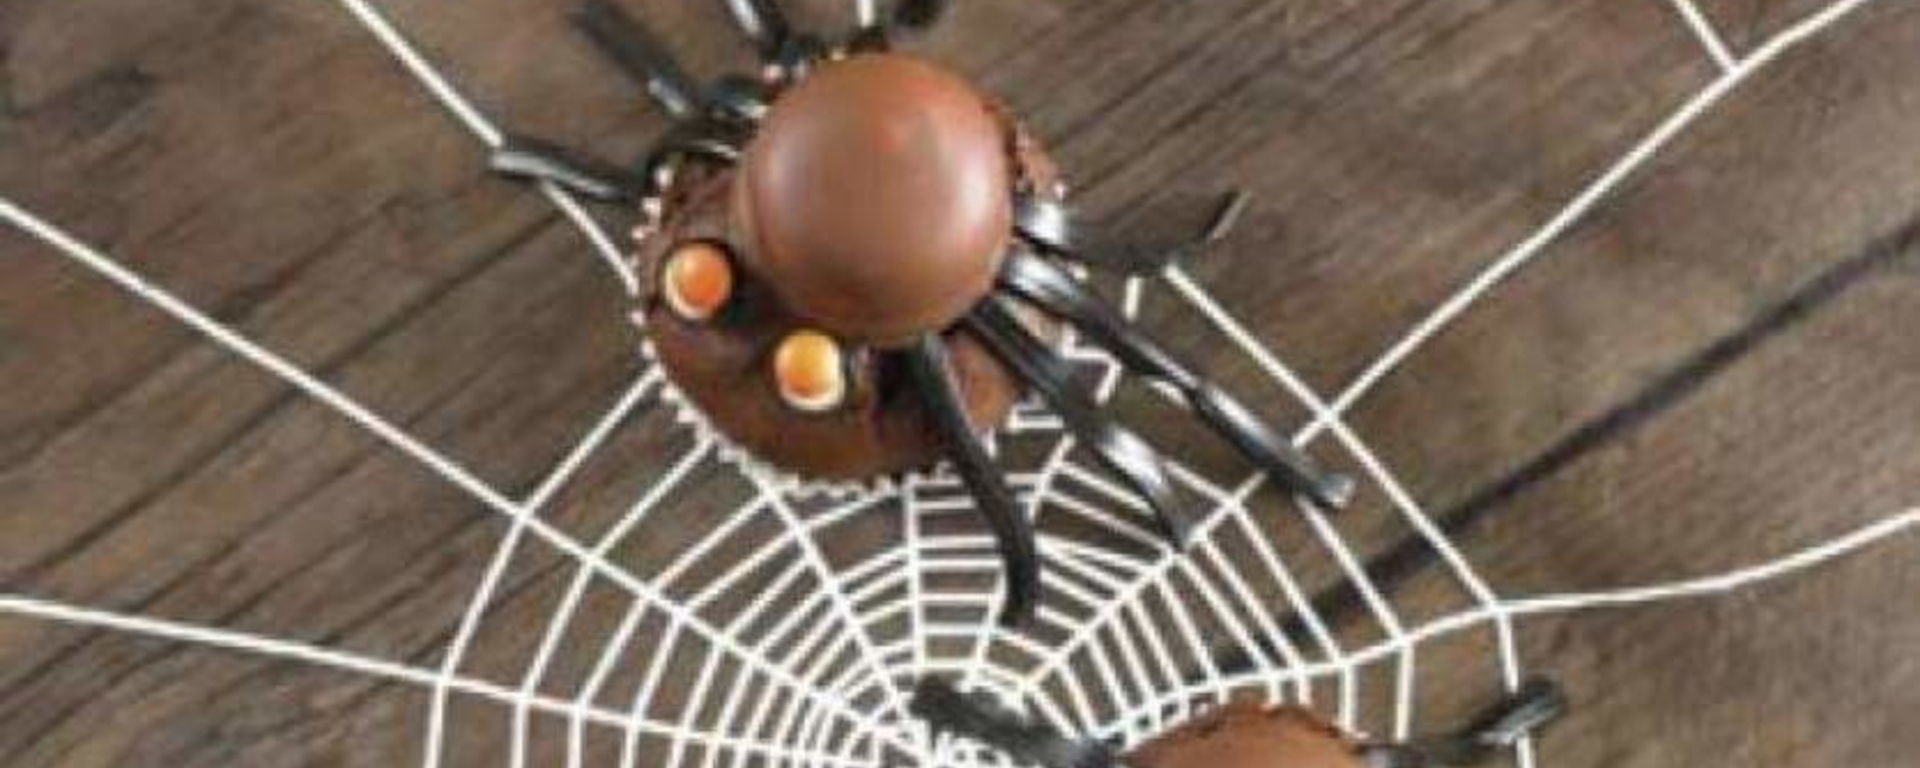 LuvMyRecipe.com - Annabel Karmel's Chocolate Spider Cakes Featured